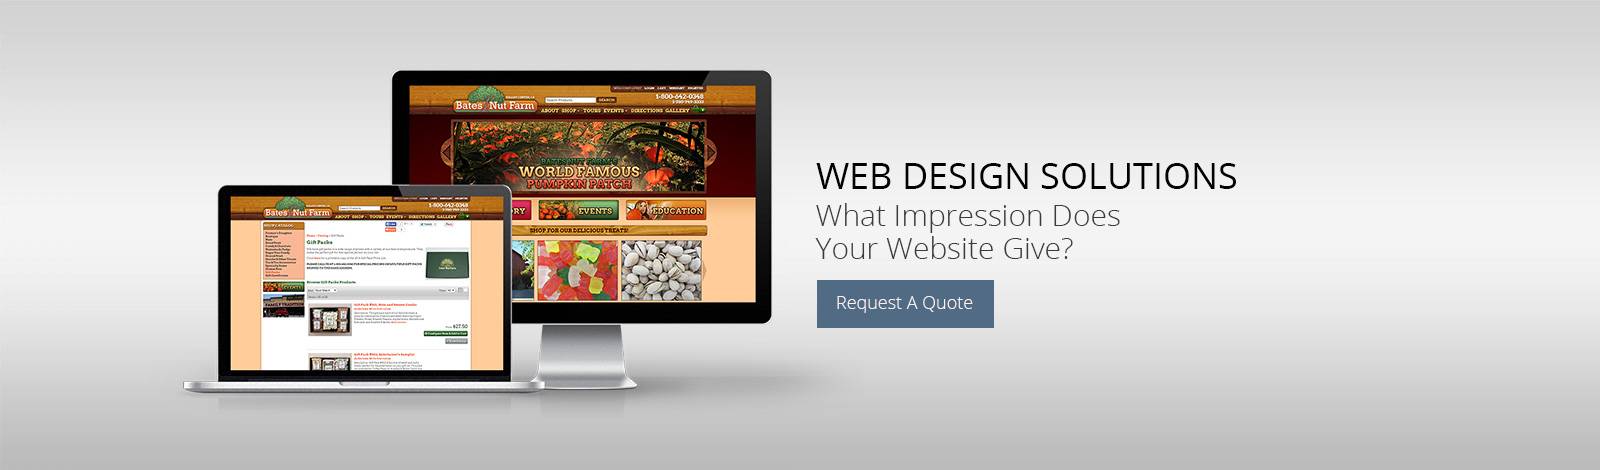 Web Design Solution - Request A Quote